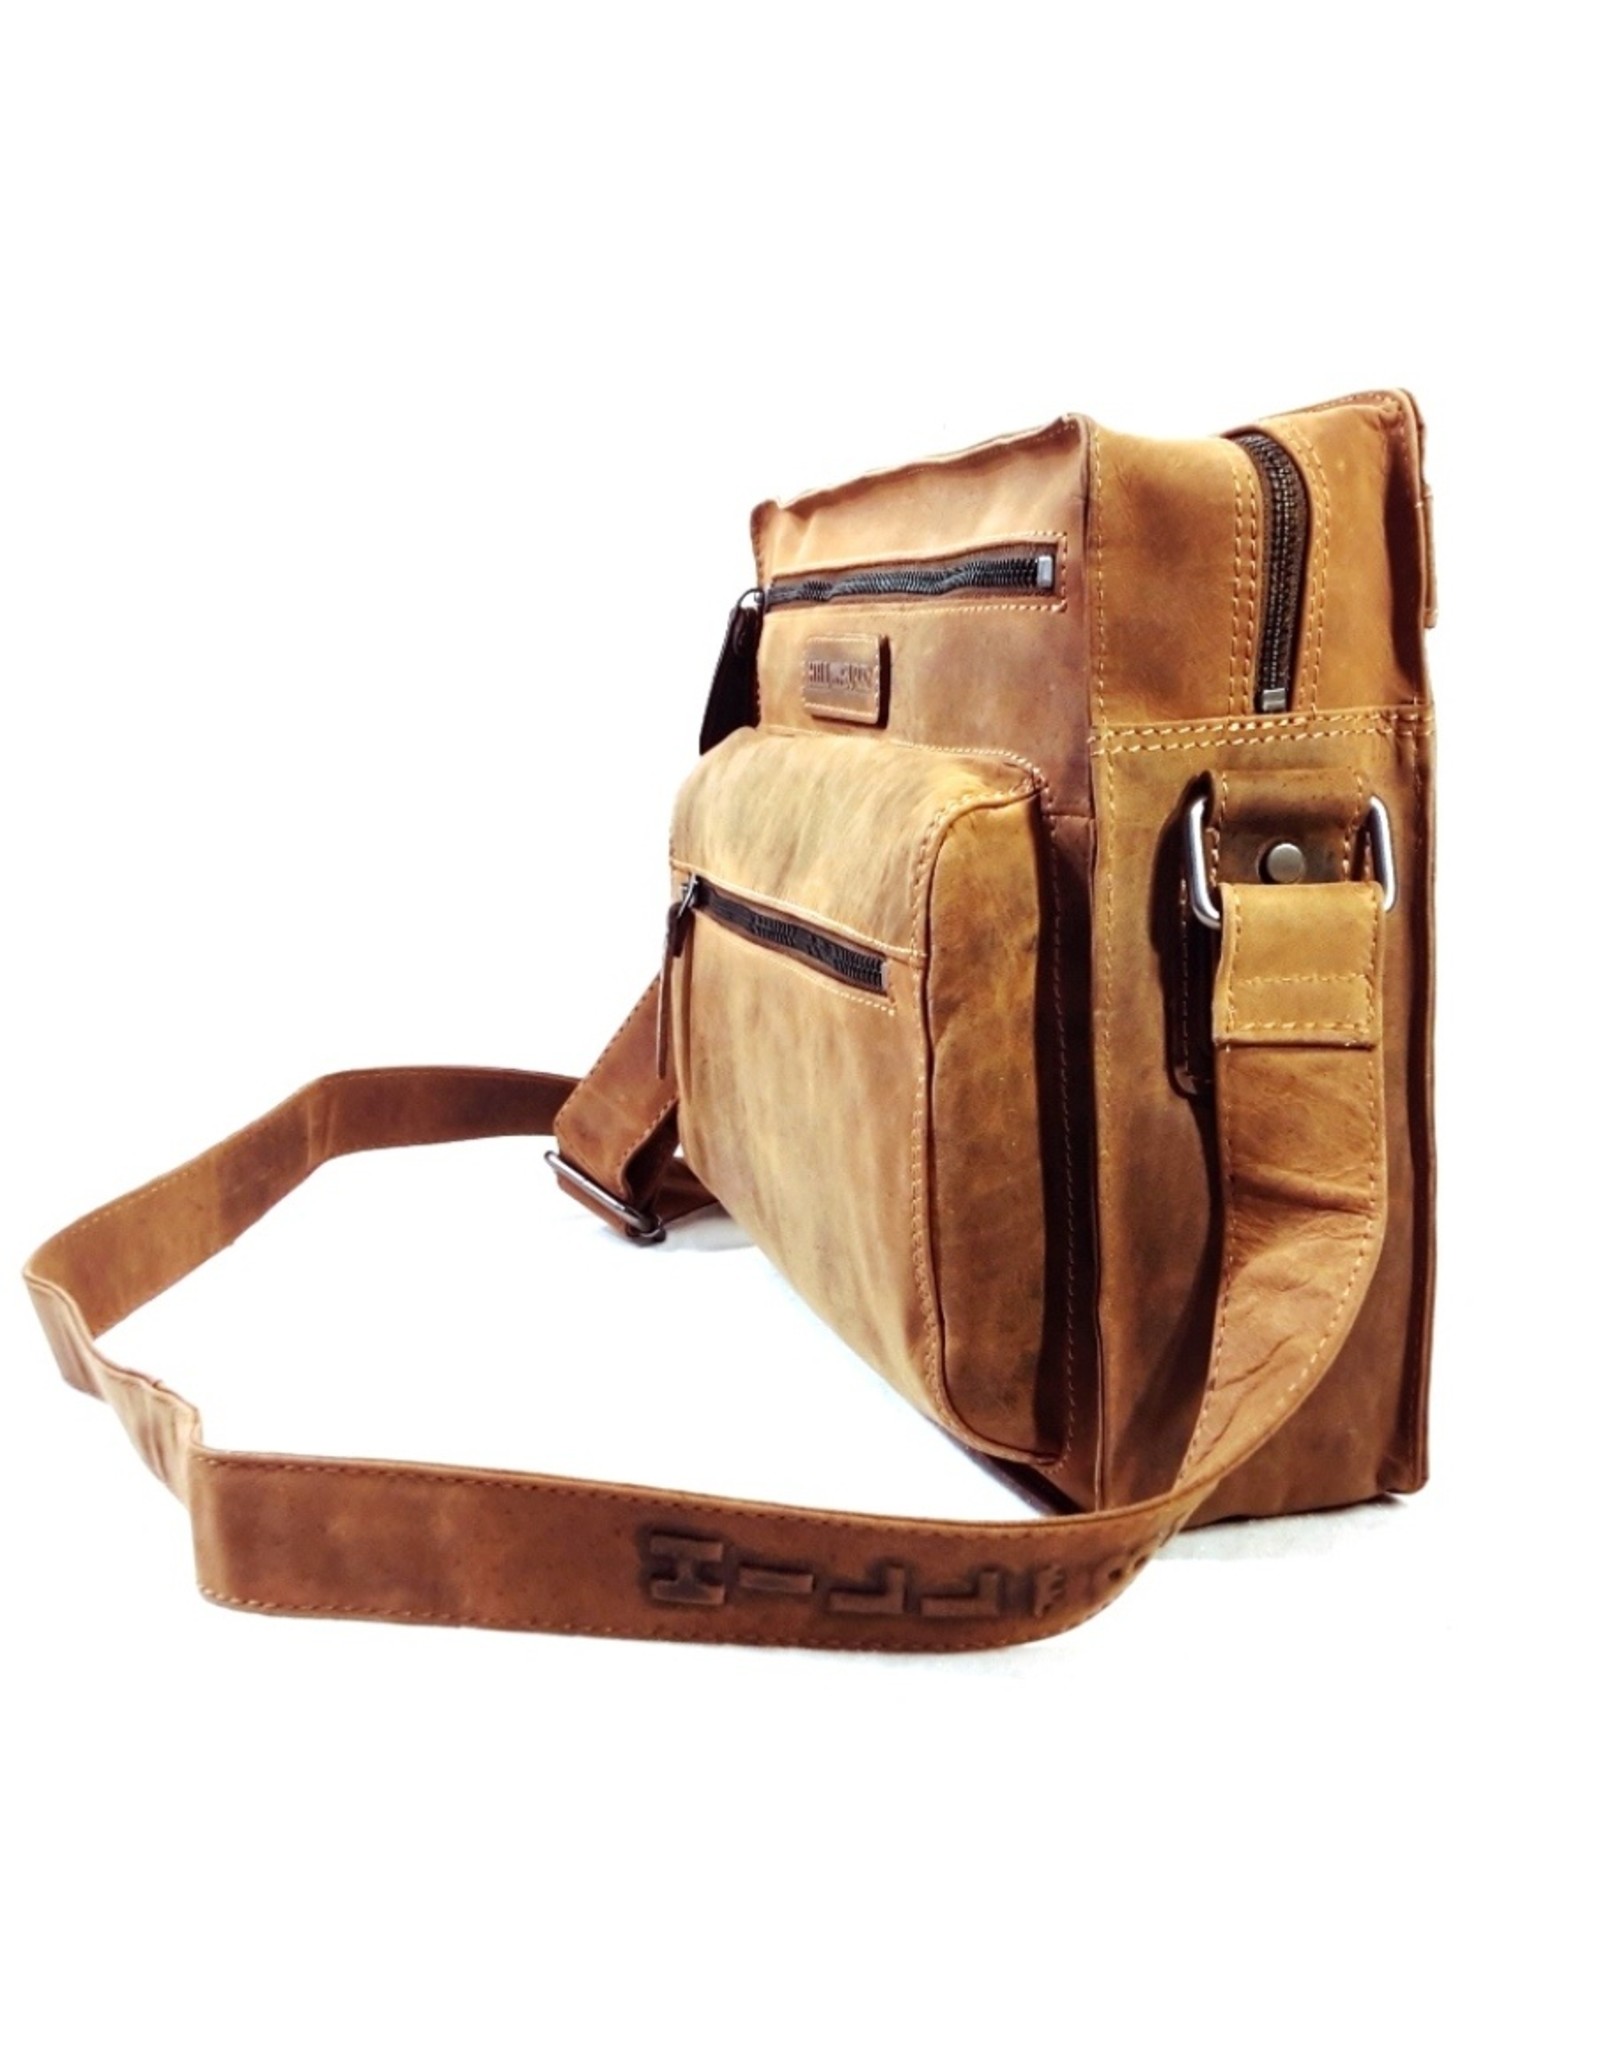 HillBurry Leather bags -  HillBurry Unisex Leather Shoulder Bag (rectangle model)